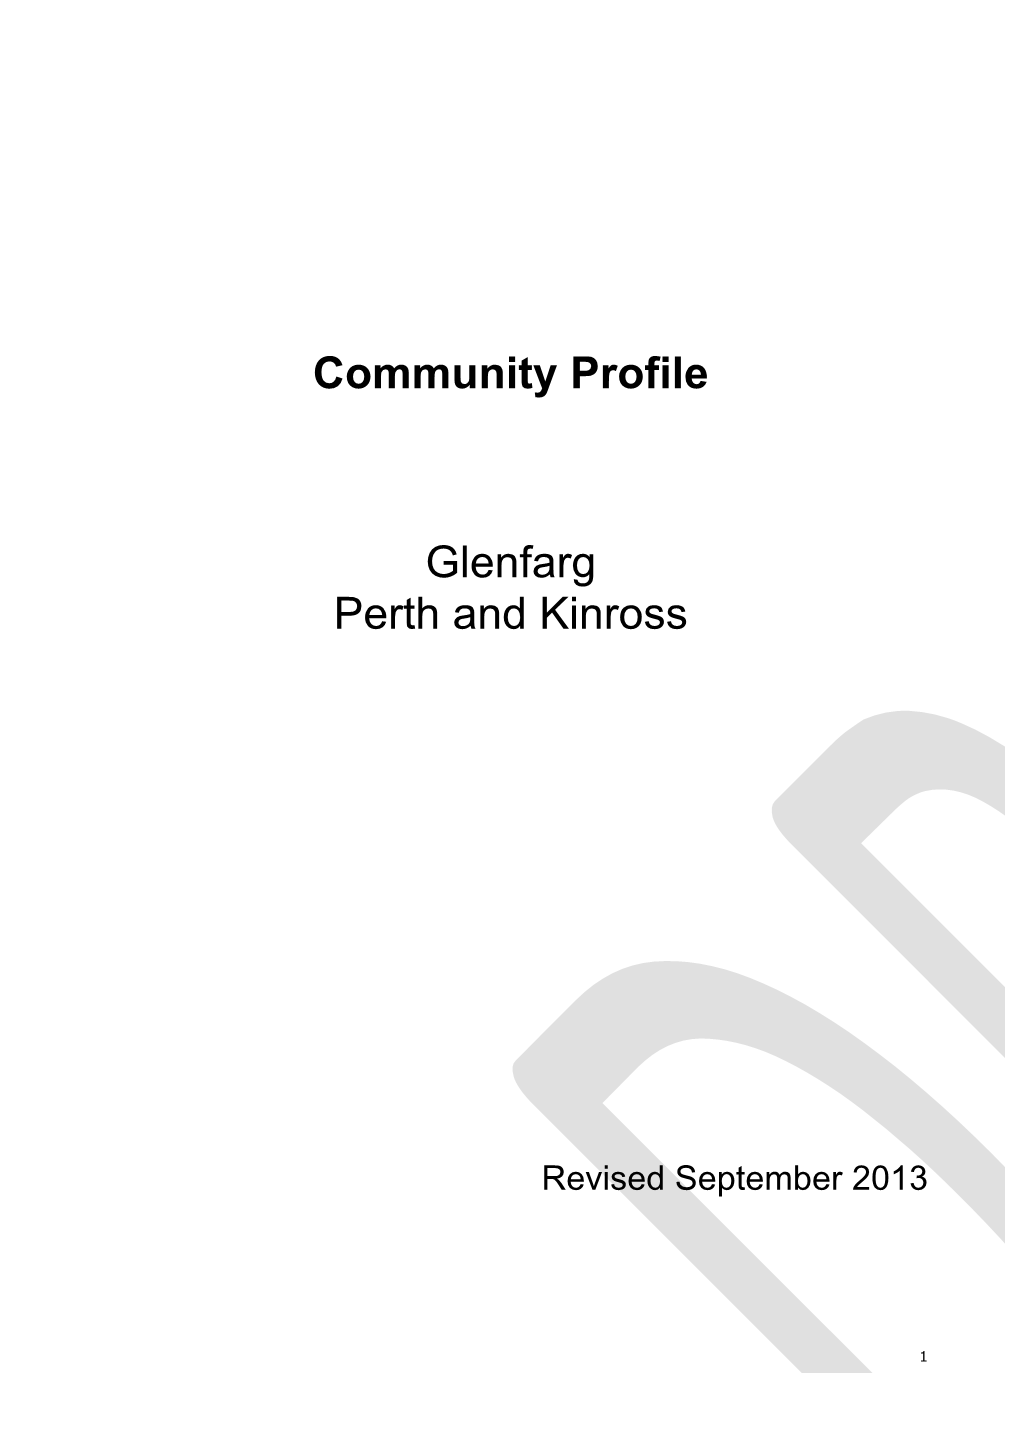 Community Profile Glenfarg Perth and Kinross